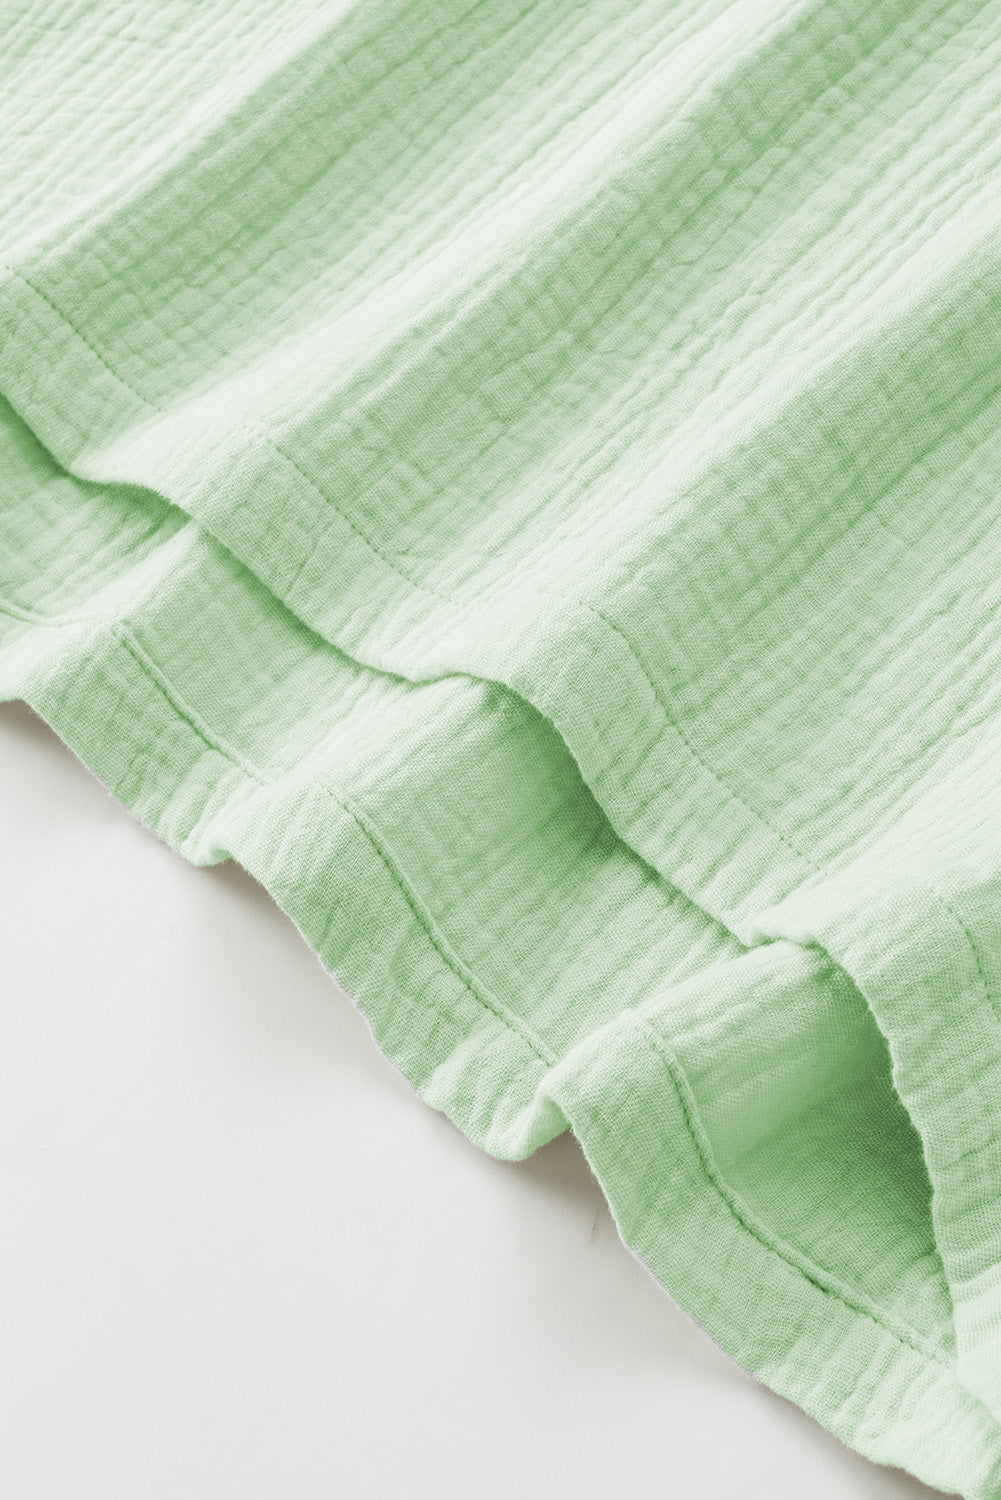 Green Crinkled Texture V Neck Ruffled Sleeve Tops & Shorts Set